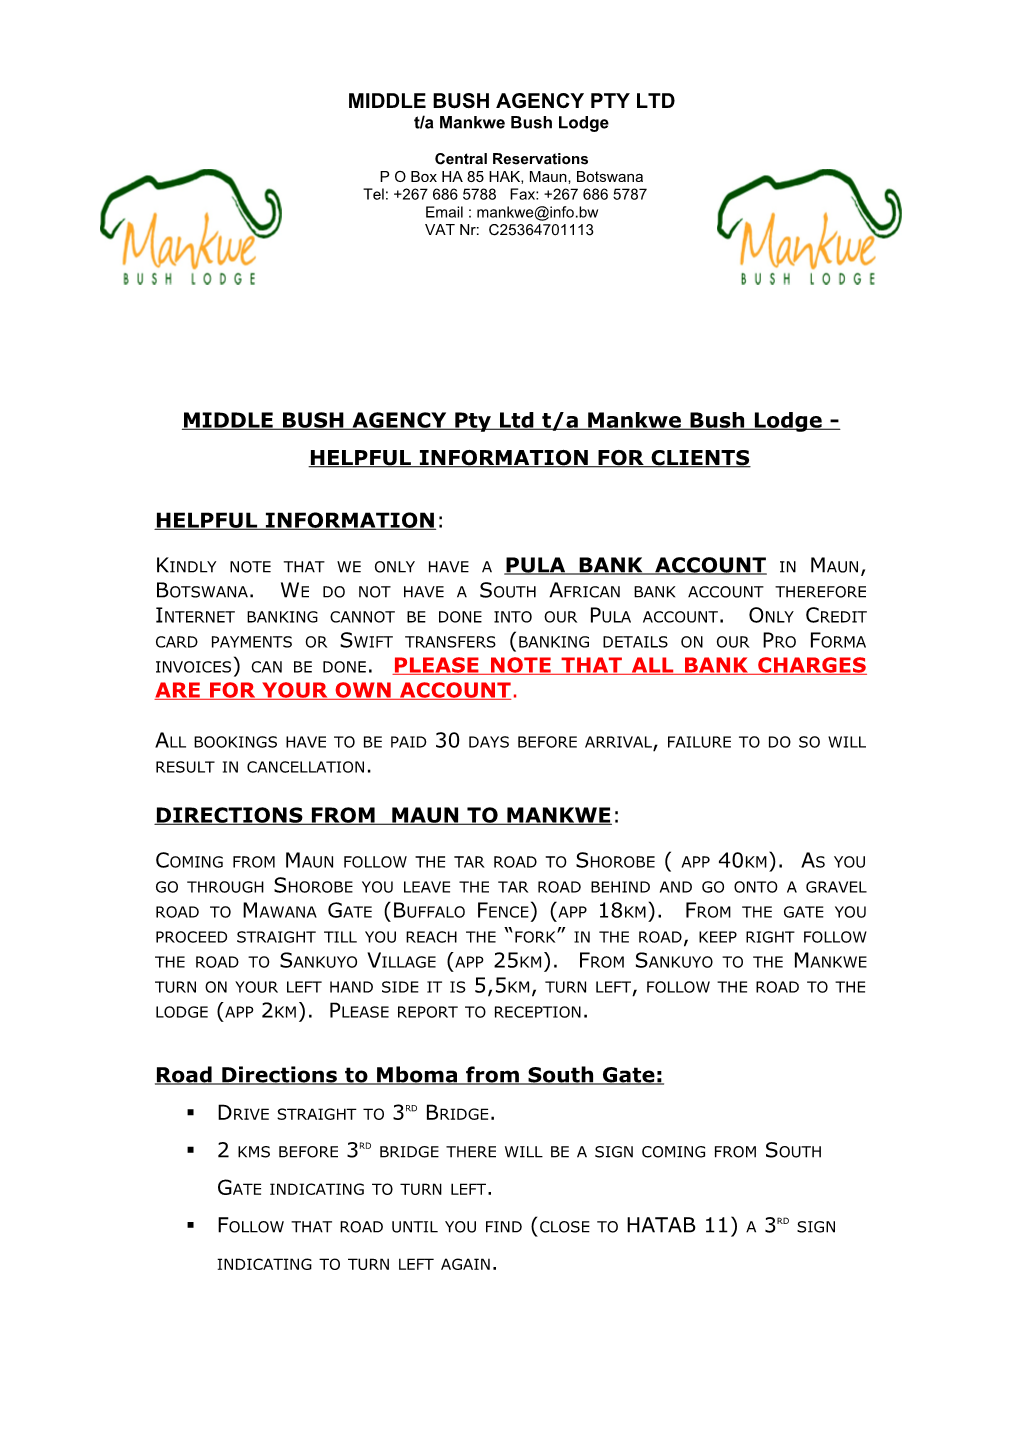 MIDDLE BUSH AGENCY Pty Ltd T/A Mankwe Bush Lodge - HELPFUL INFORMATION for CLIENTS